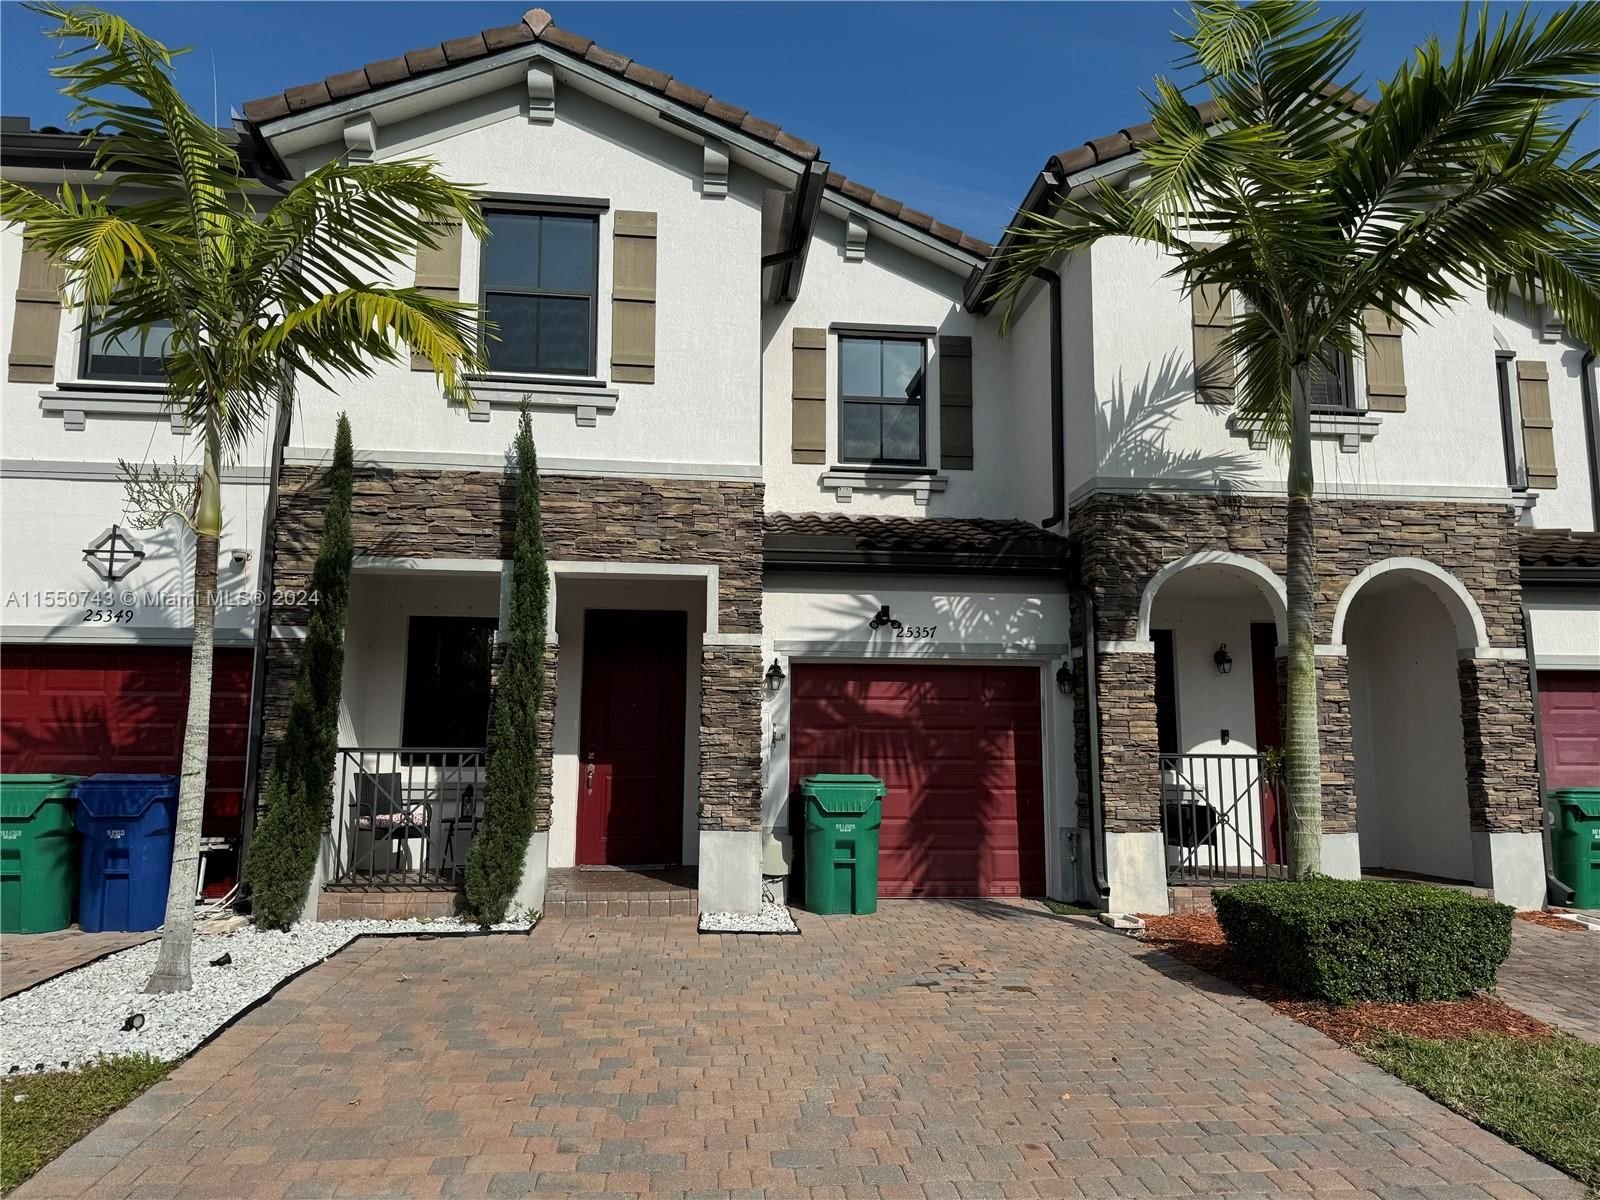 Real estate property located at 25357 116th Ave, Miami-Dade County, COCO PALM ESTATES, Homestead, FL